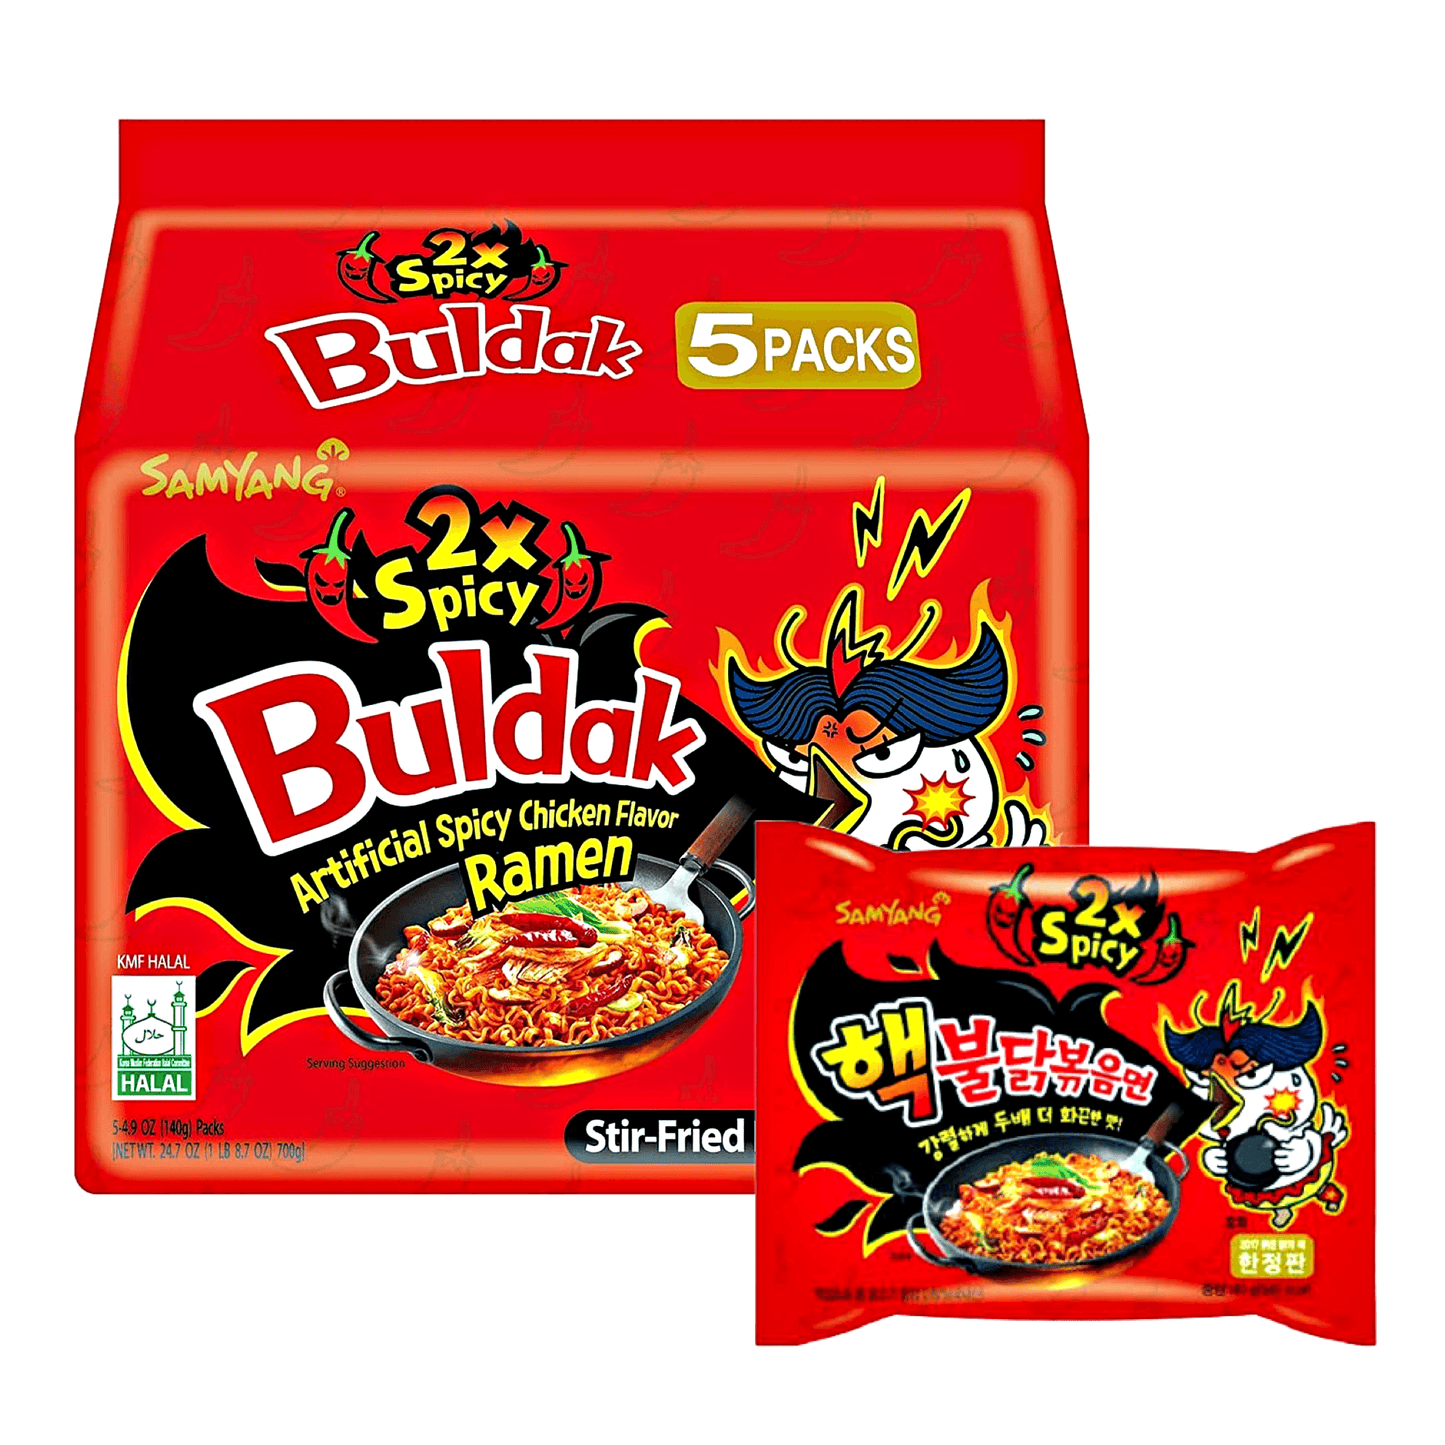 SamYang 2x Spicy Chicken Flavor Stir-fried Ramen 5x140g - The Snacks Box - Asian Snacks Store - The Snacks Box - Korean Snack - Japanese Snack